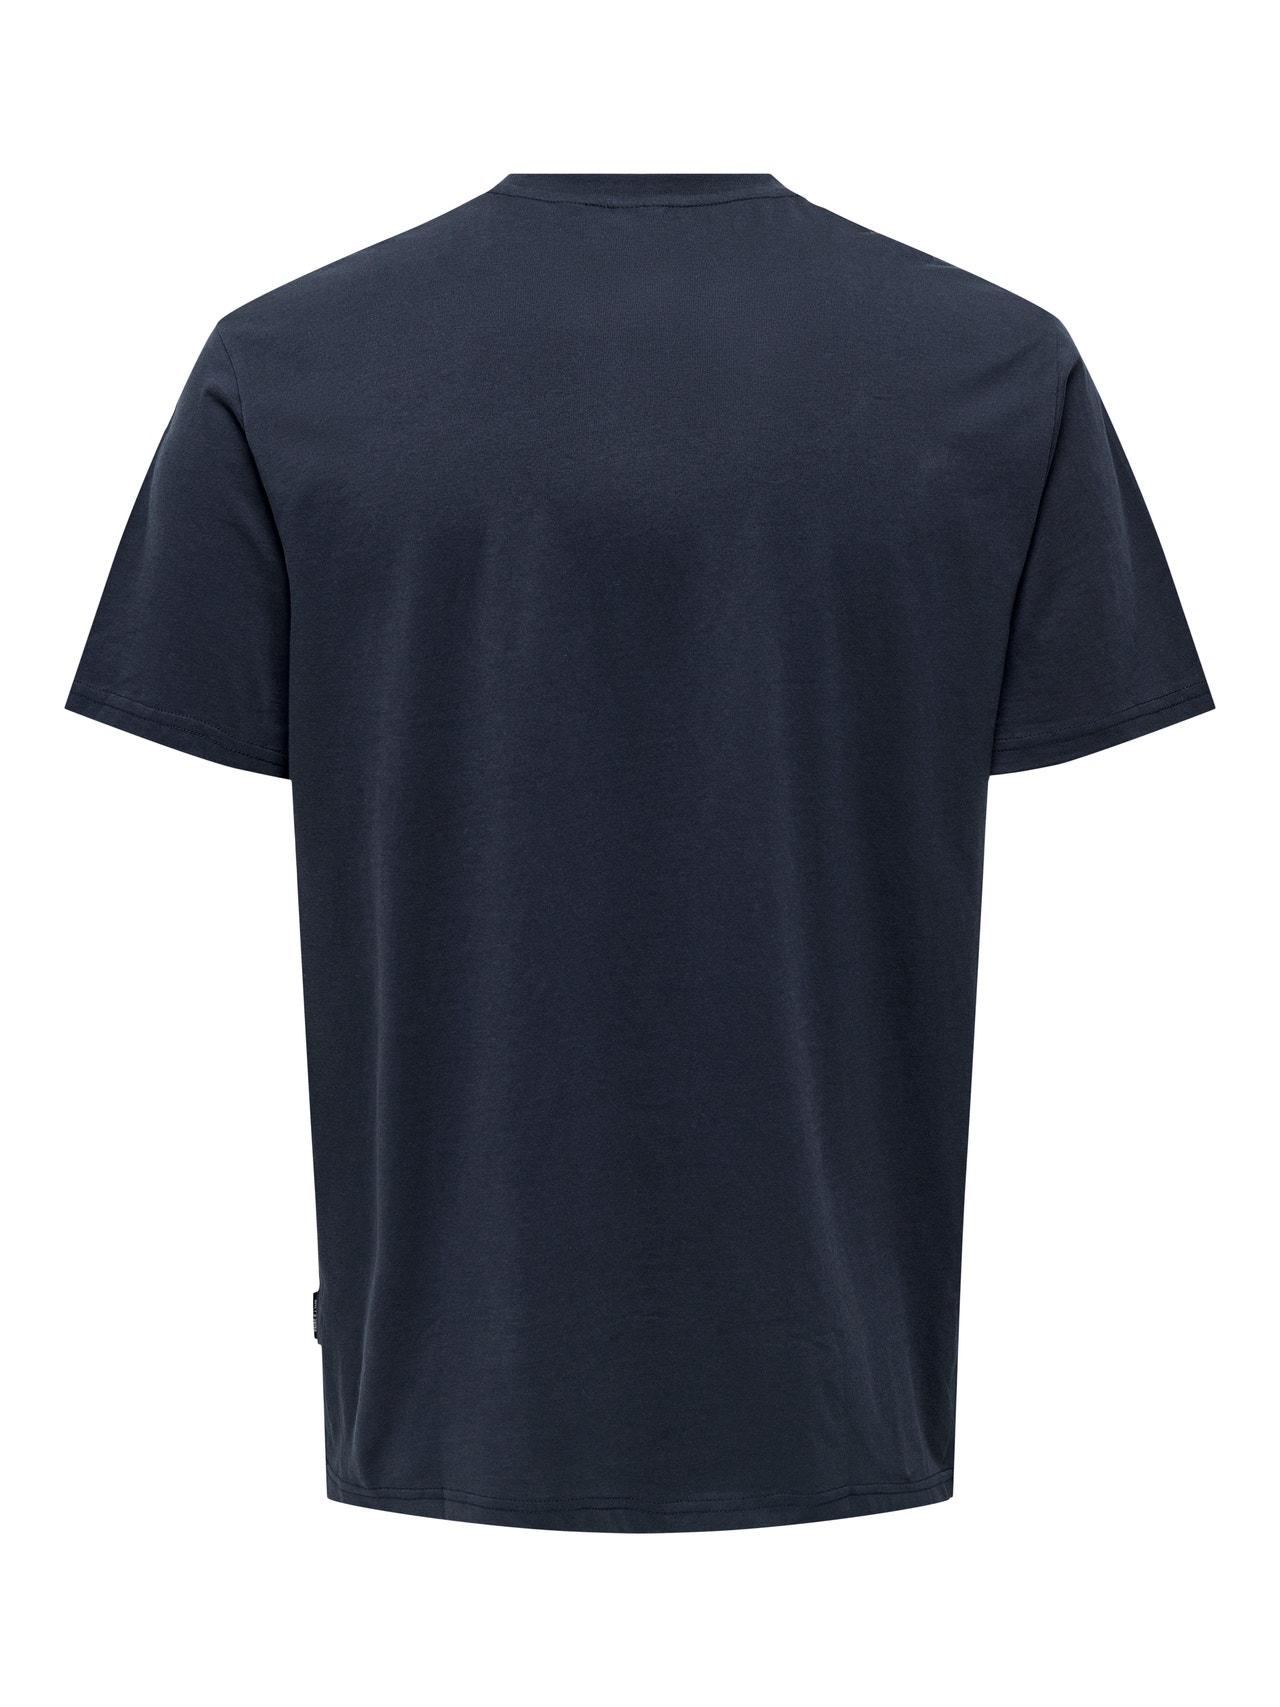 ONLY & SONS Camisetas Corte regular Cuello redondo -Dark Navy - 22027005